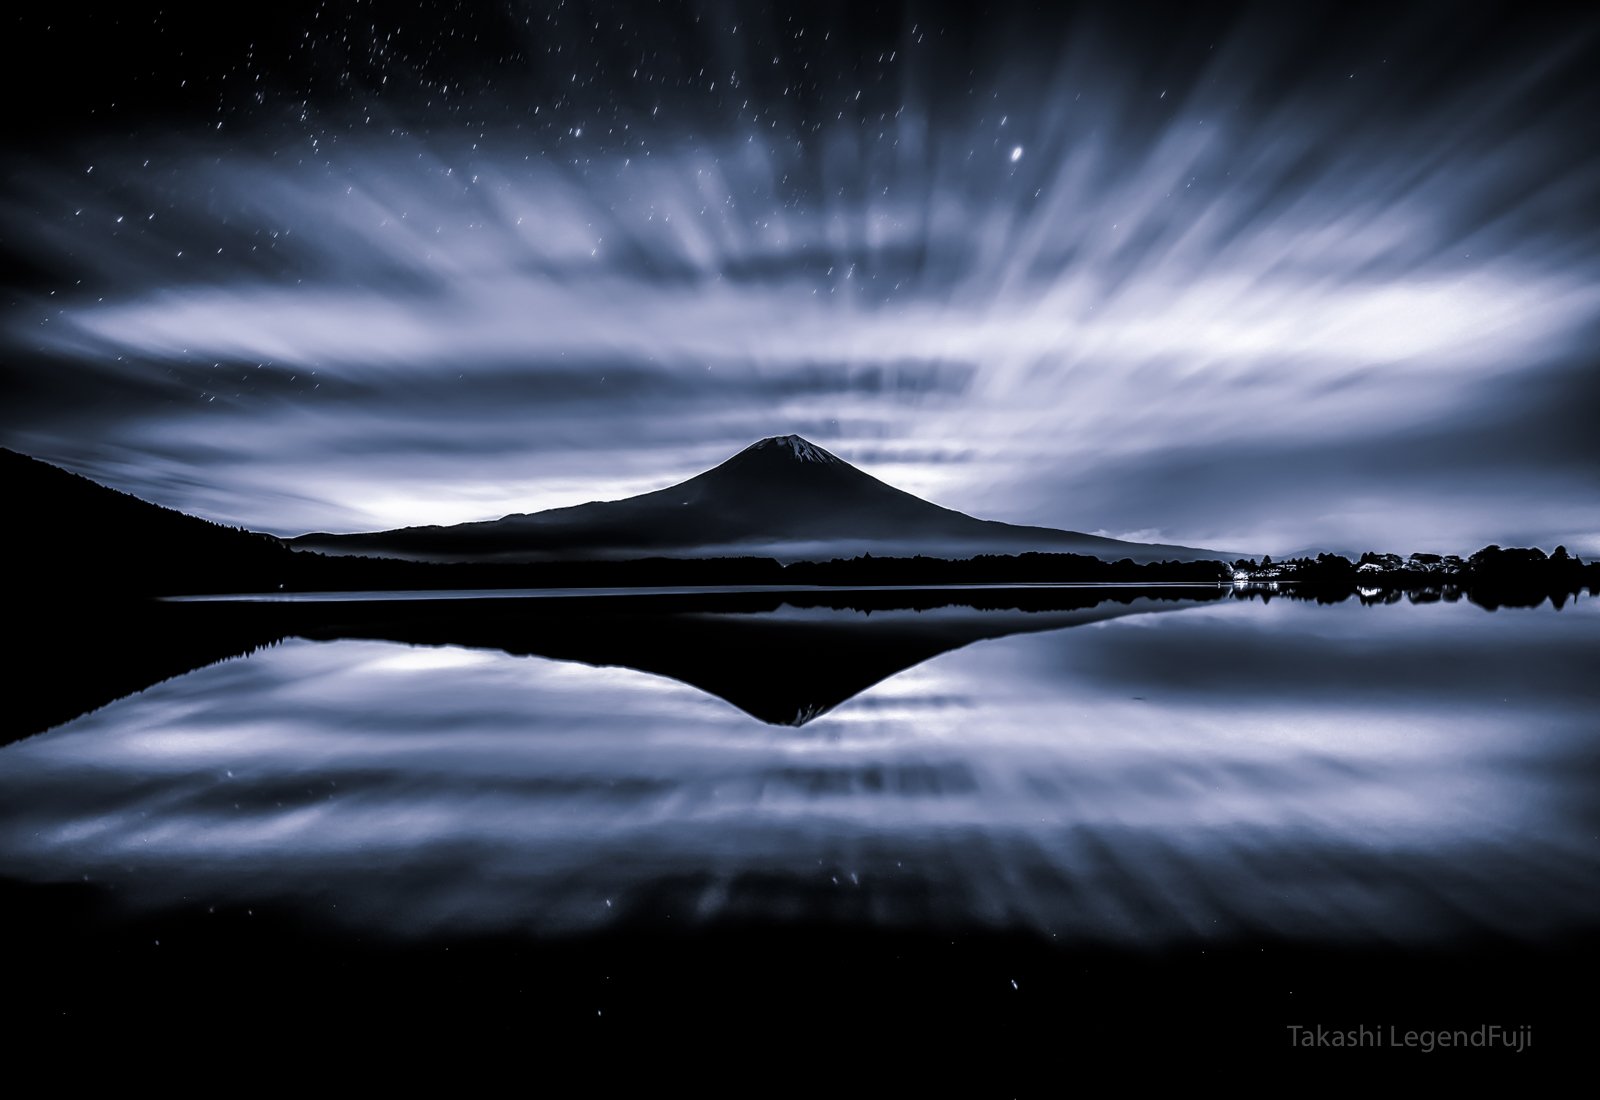 Fuji,mountain,Japan,lake,reflection,cloud,star,night,calm,beautiful,landscapes,, Takashi